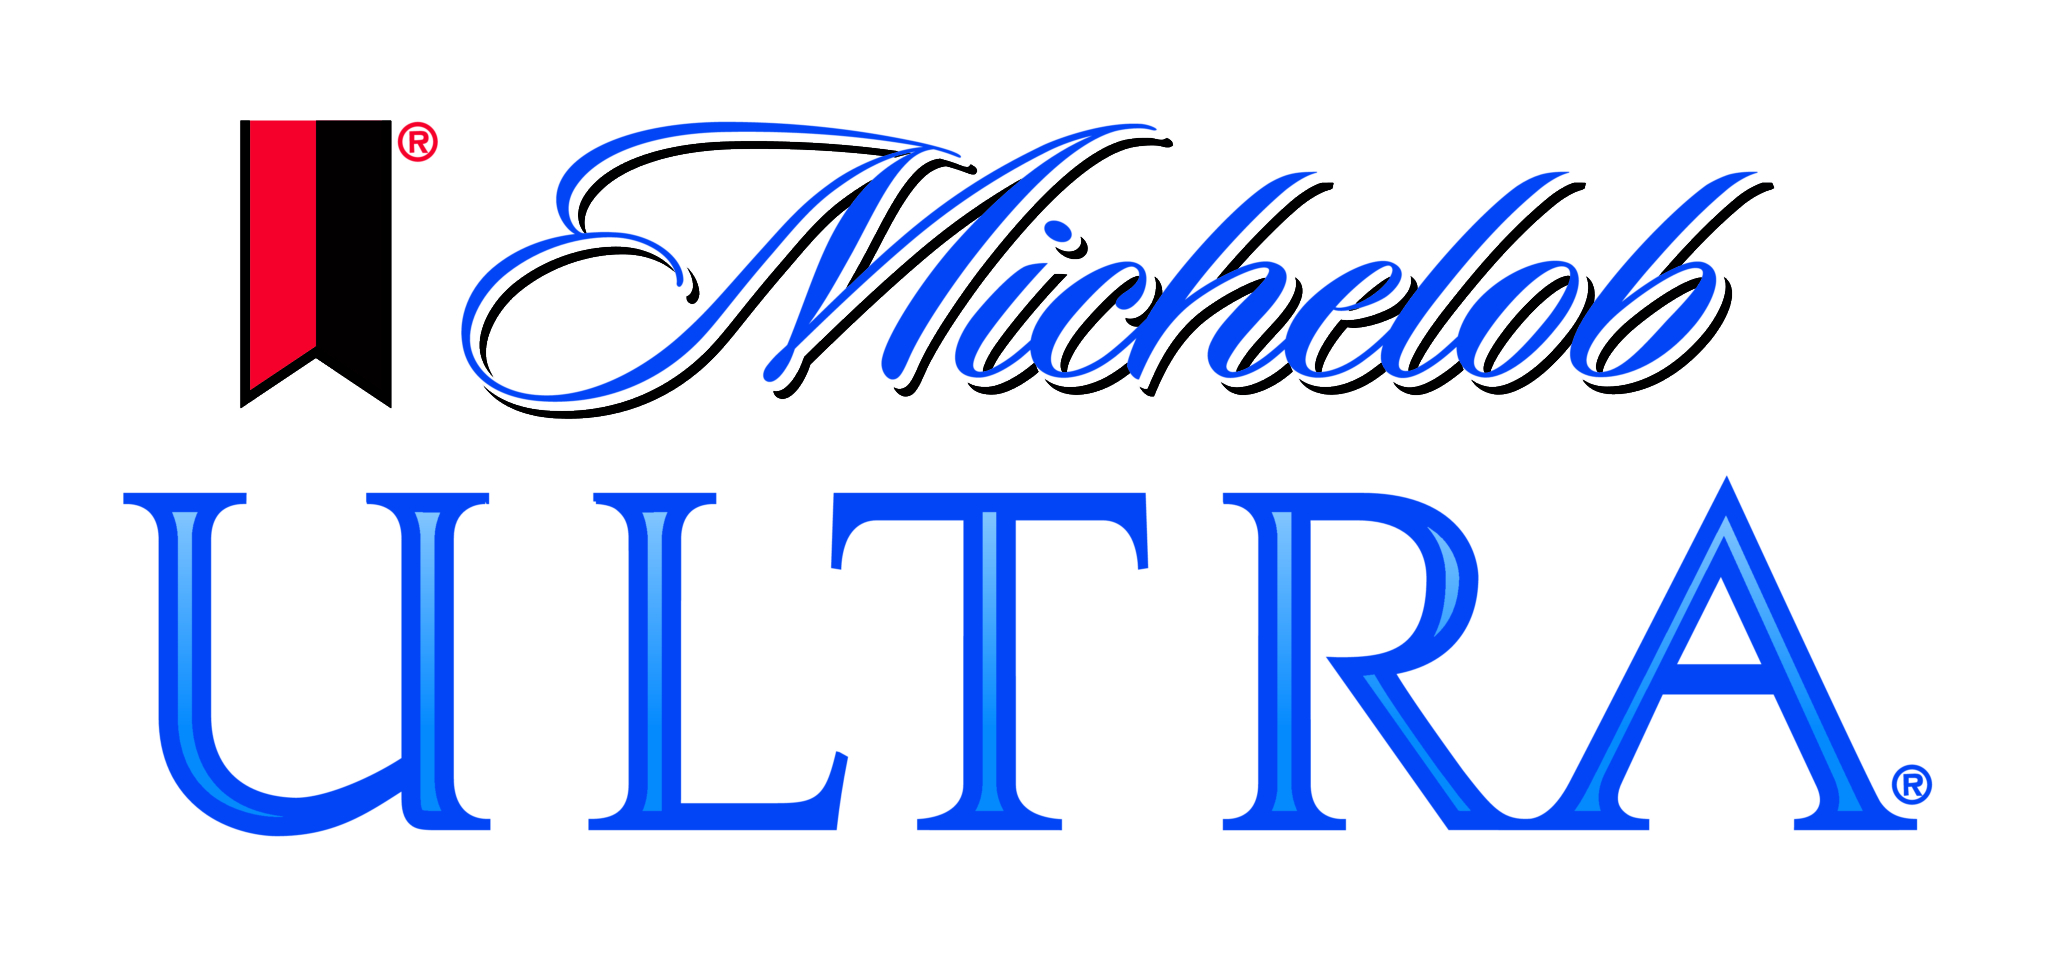 The logo for michel bob ultra.